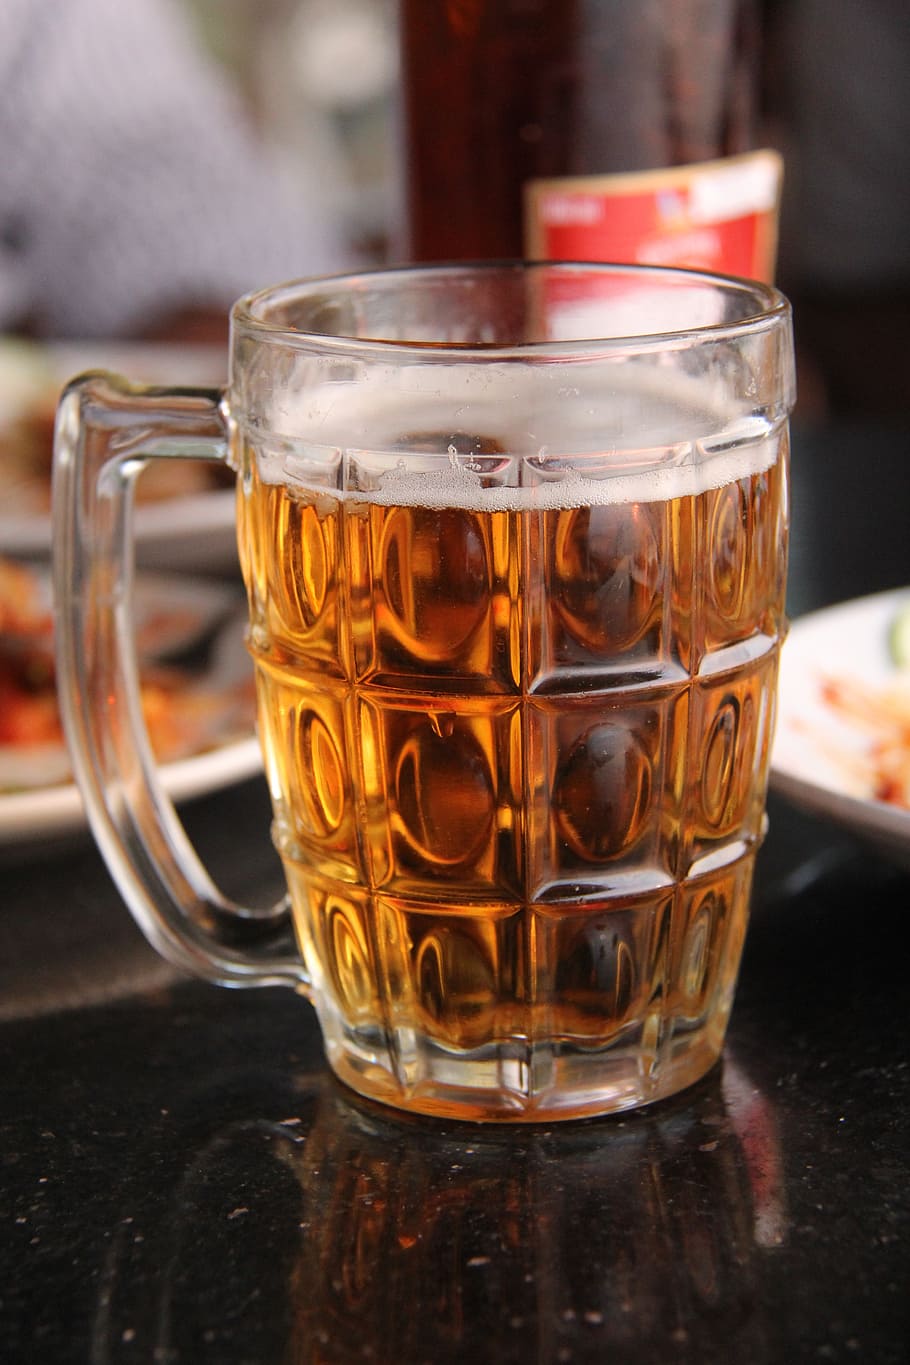 hampir, diisi, gelas bir, hitam, meja, atas, bir, gelas, minuman, alkohol